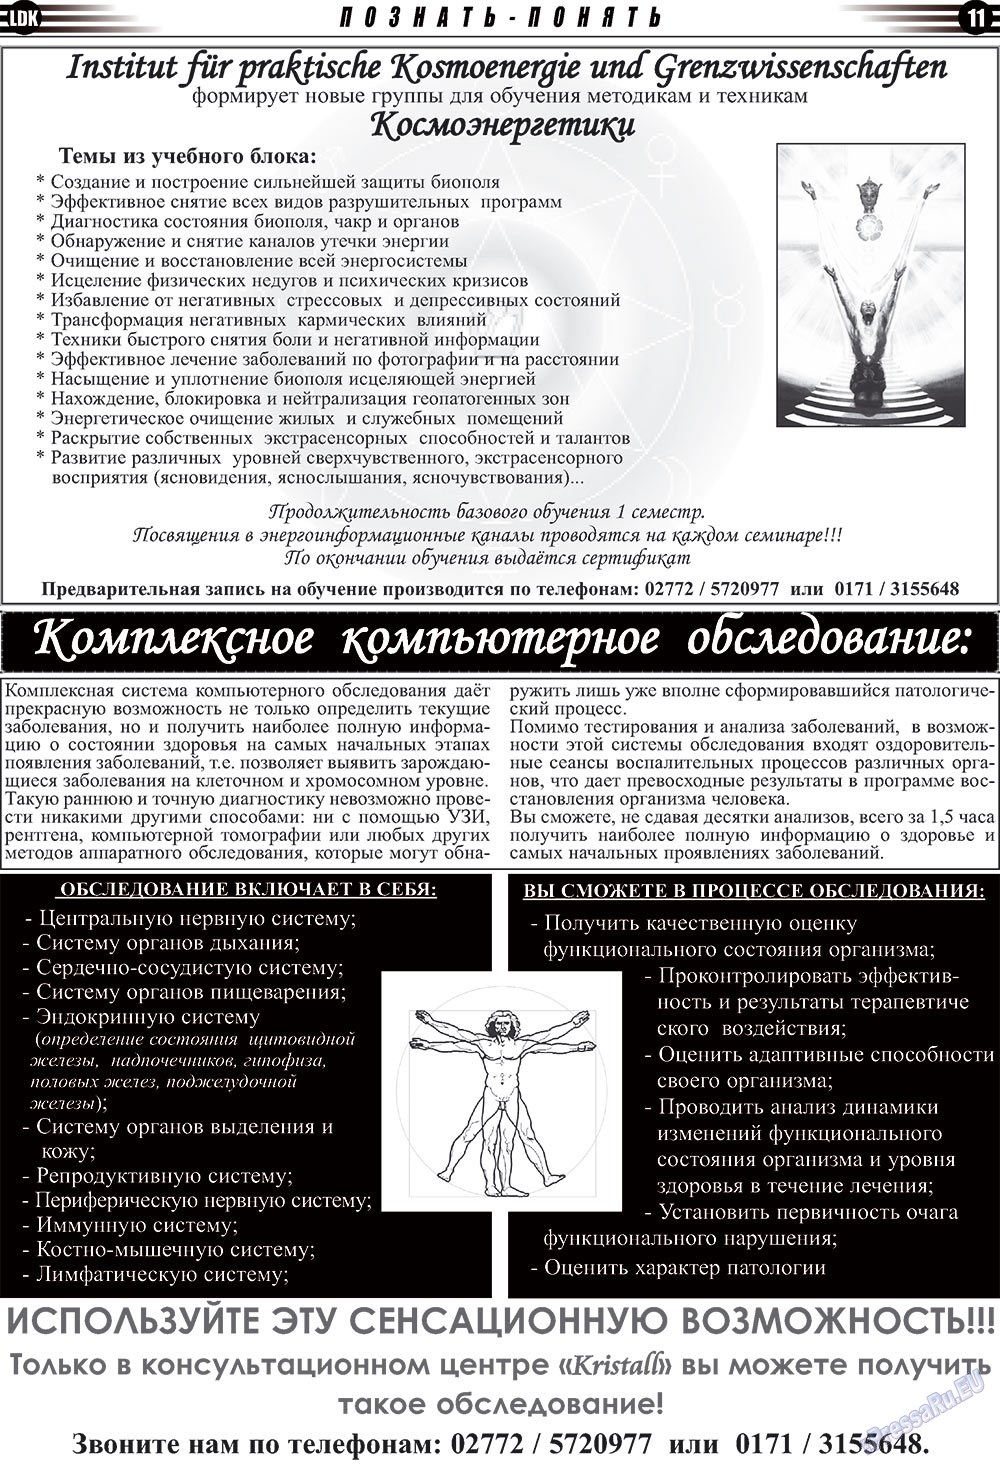 LDK по-русски, газета. 2009 №6 стр.11